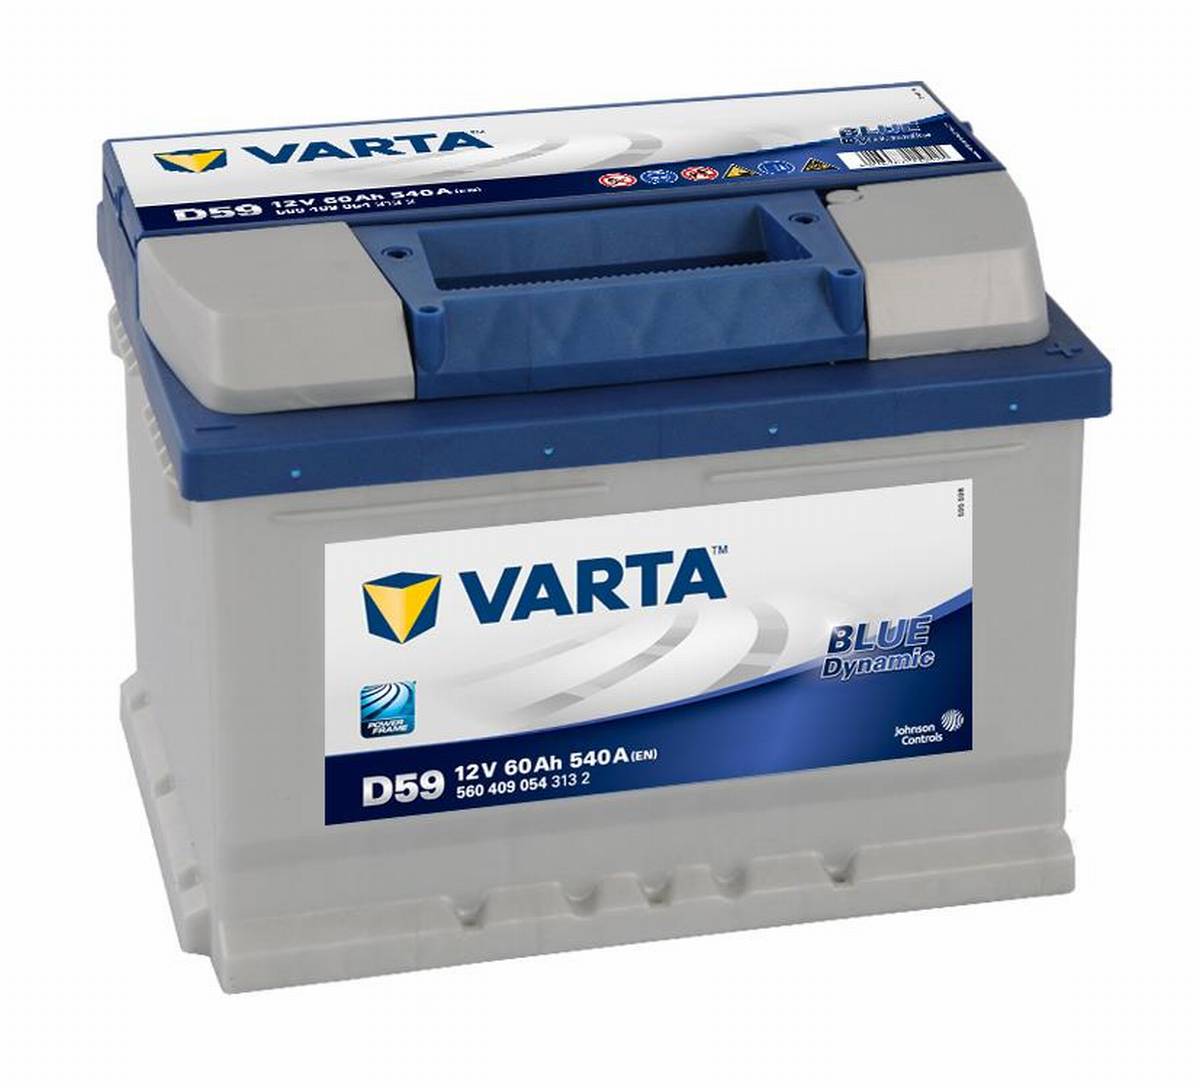 Varta BLUE Dynamic 560 409 054 3132 D59 12V 60Ah 540A/EN car battery, Starter batteries, Boots & Marine, Batteries by application